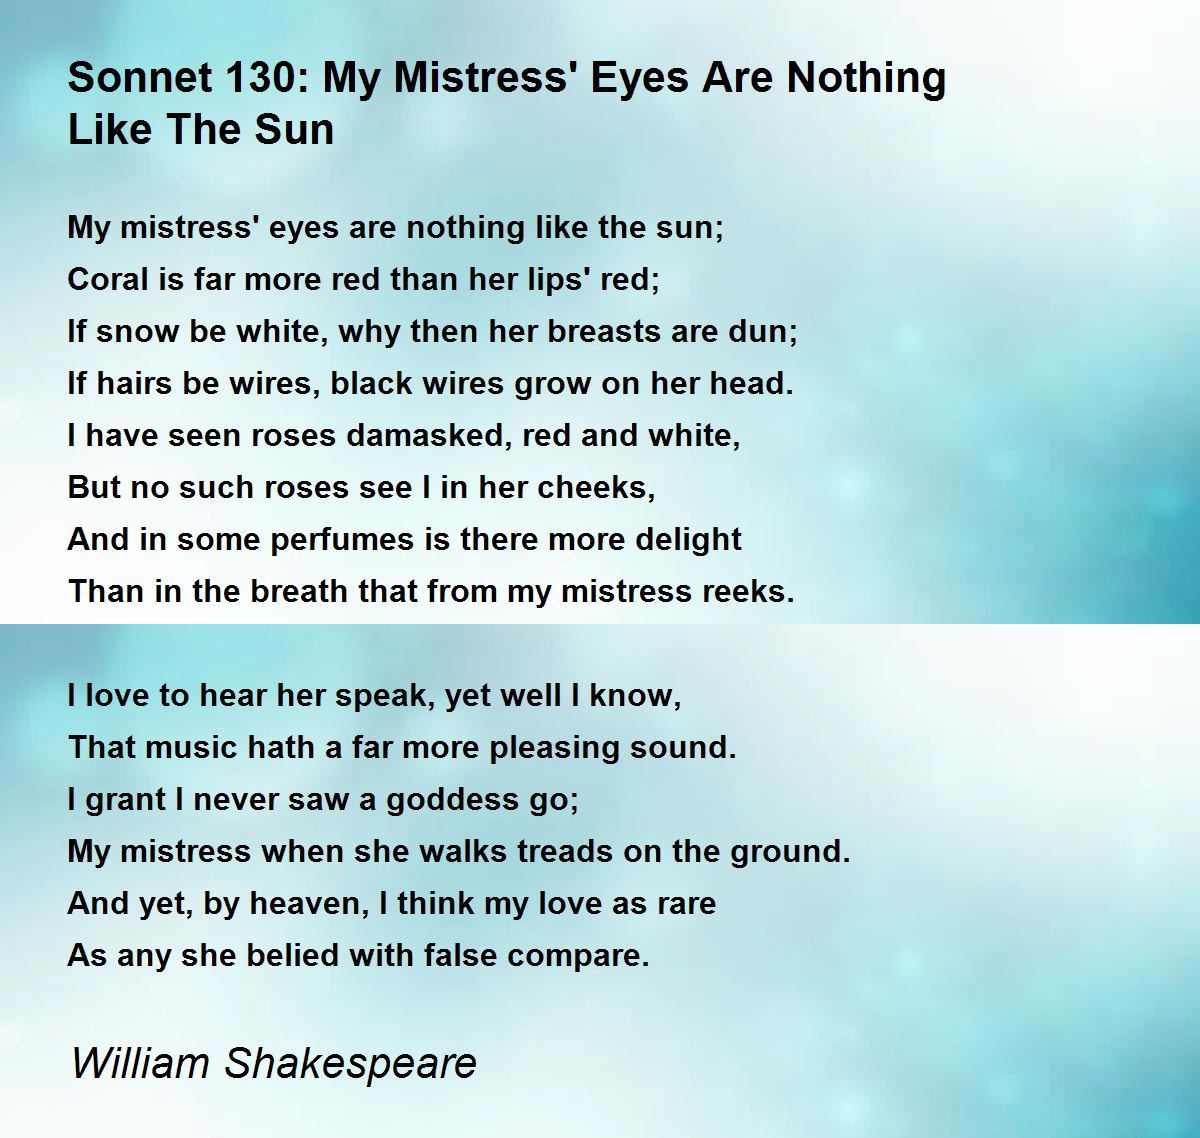 sonnet 130 theme